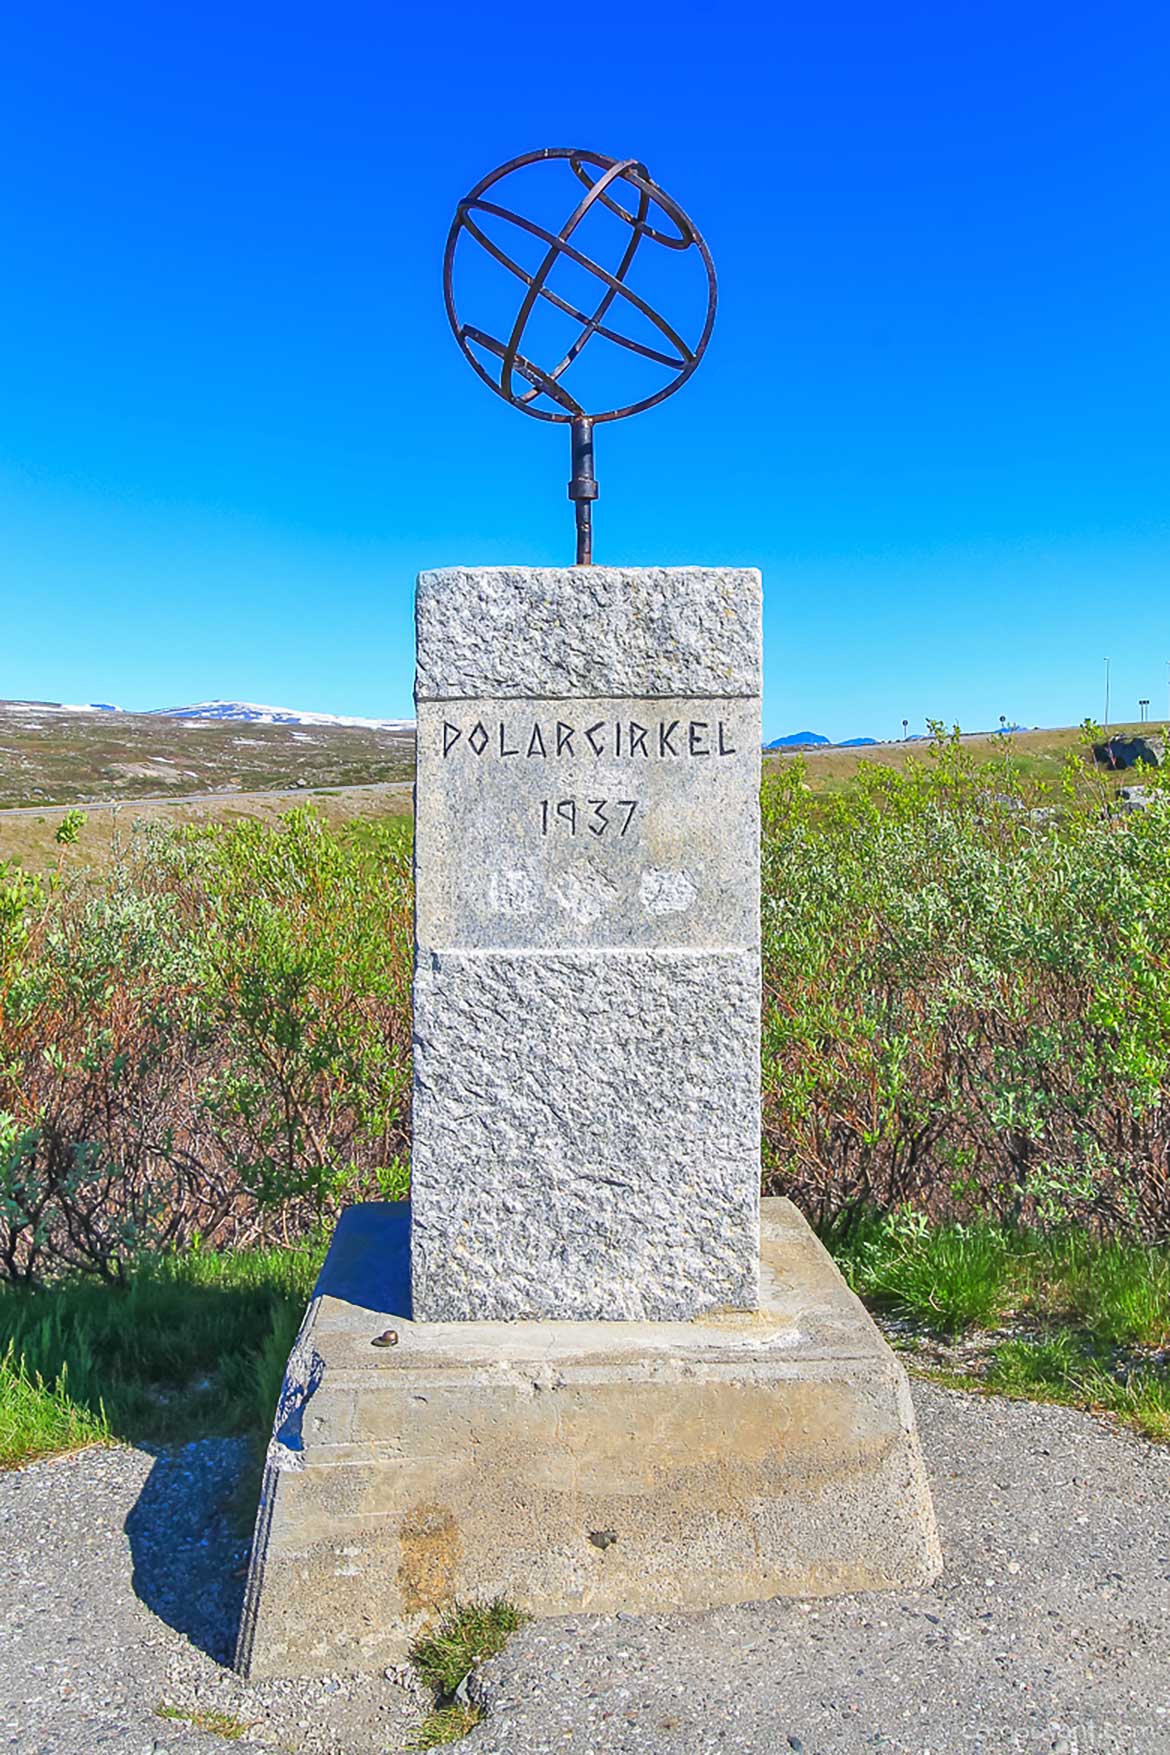 Denkmal Polarkreis Norwegen